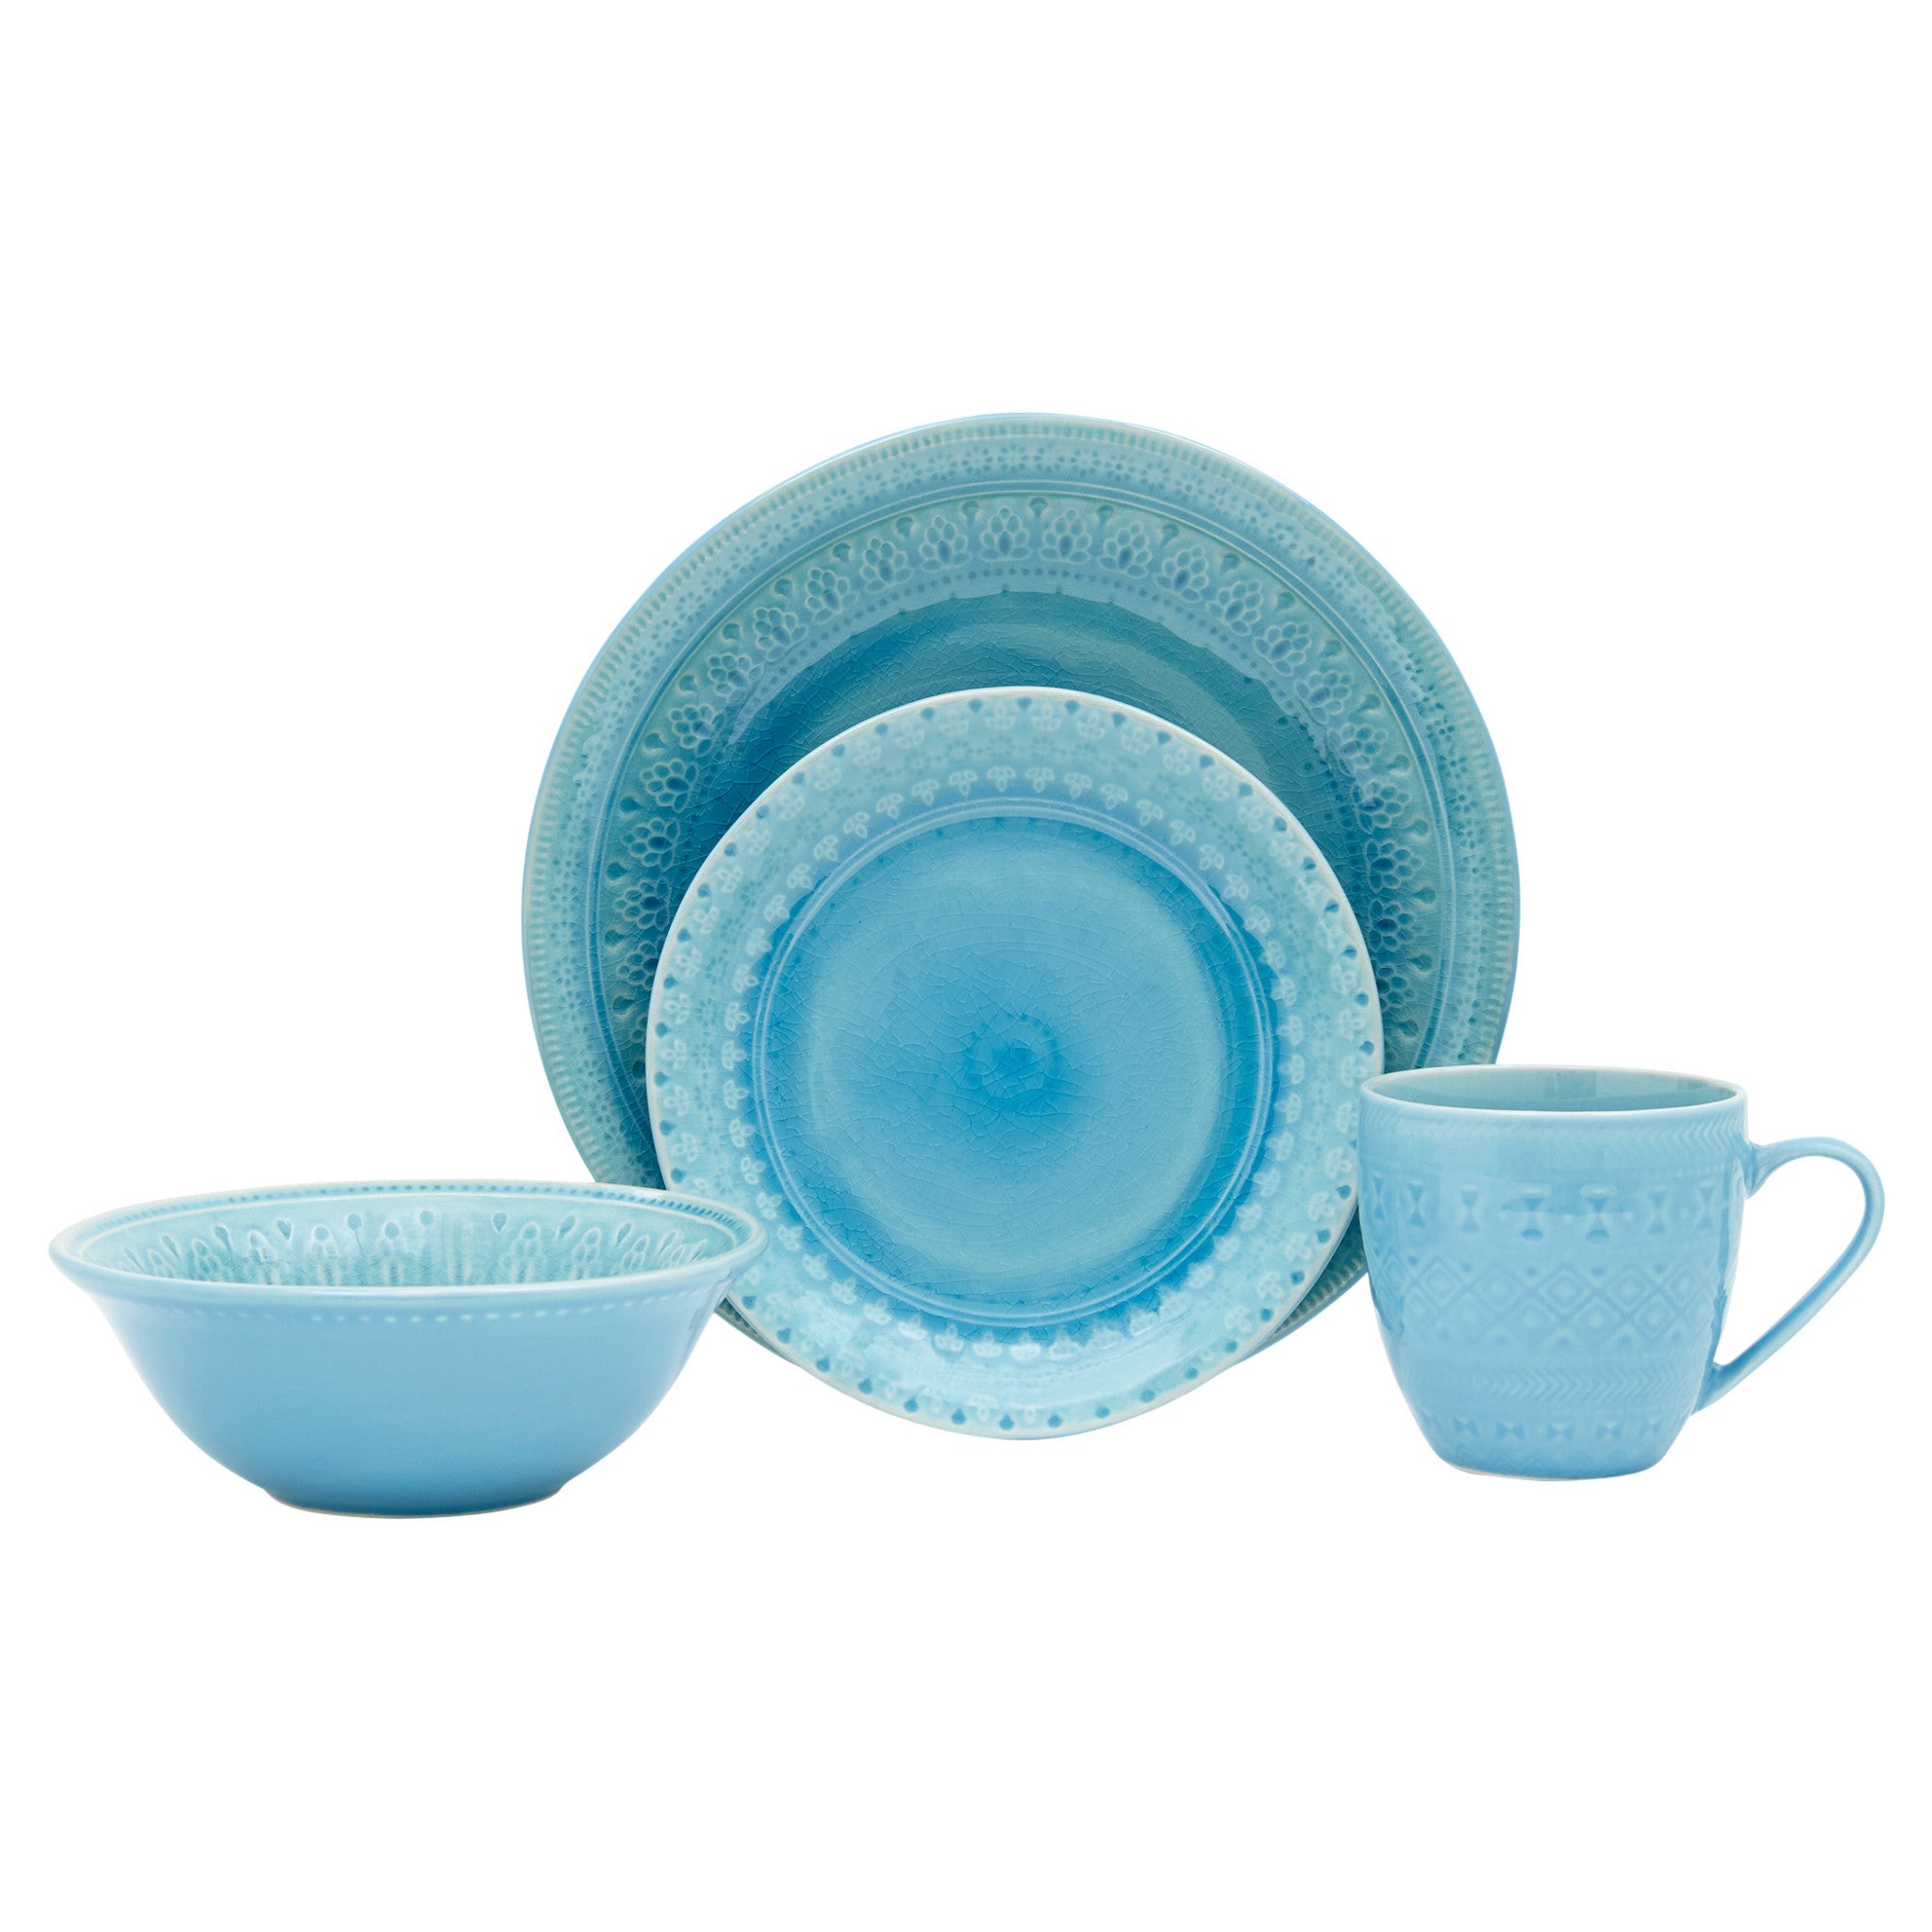 Aqua-Sixteen-Piece-Floral-Medallion-Ceramic-Service-For-Four-Dinnerware-Set-Dinnerware